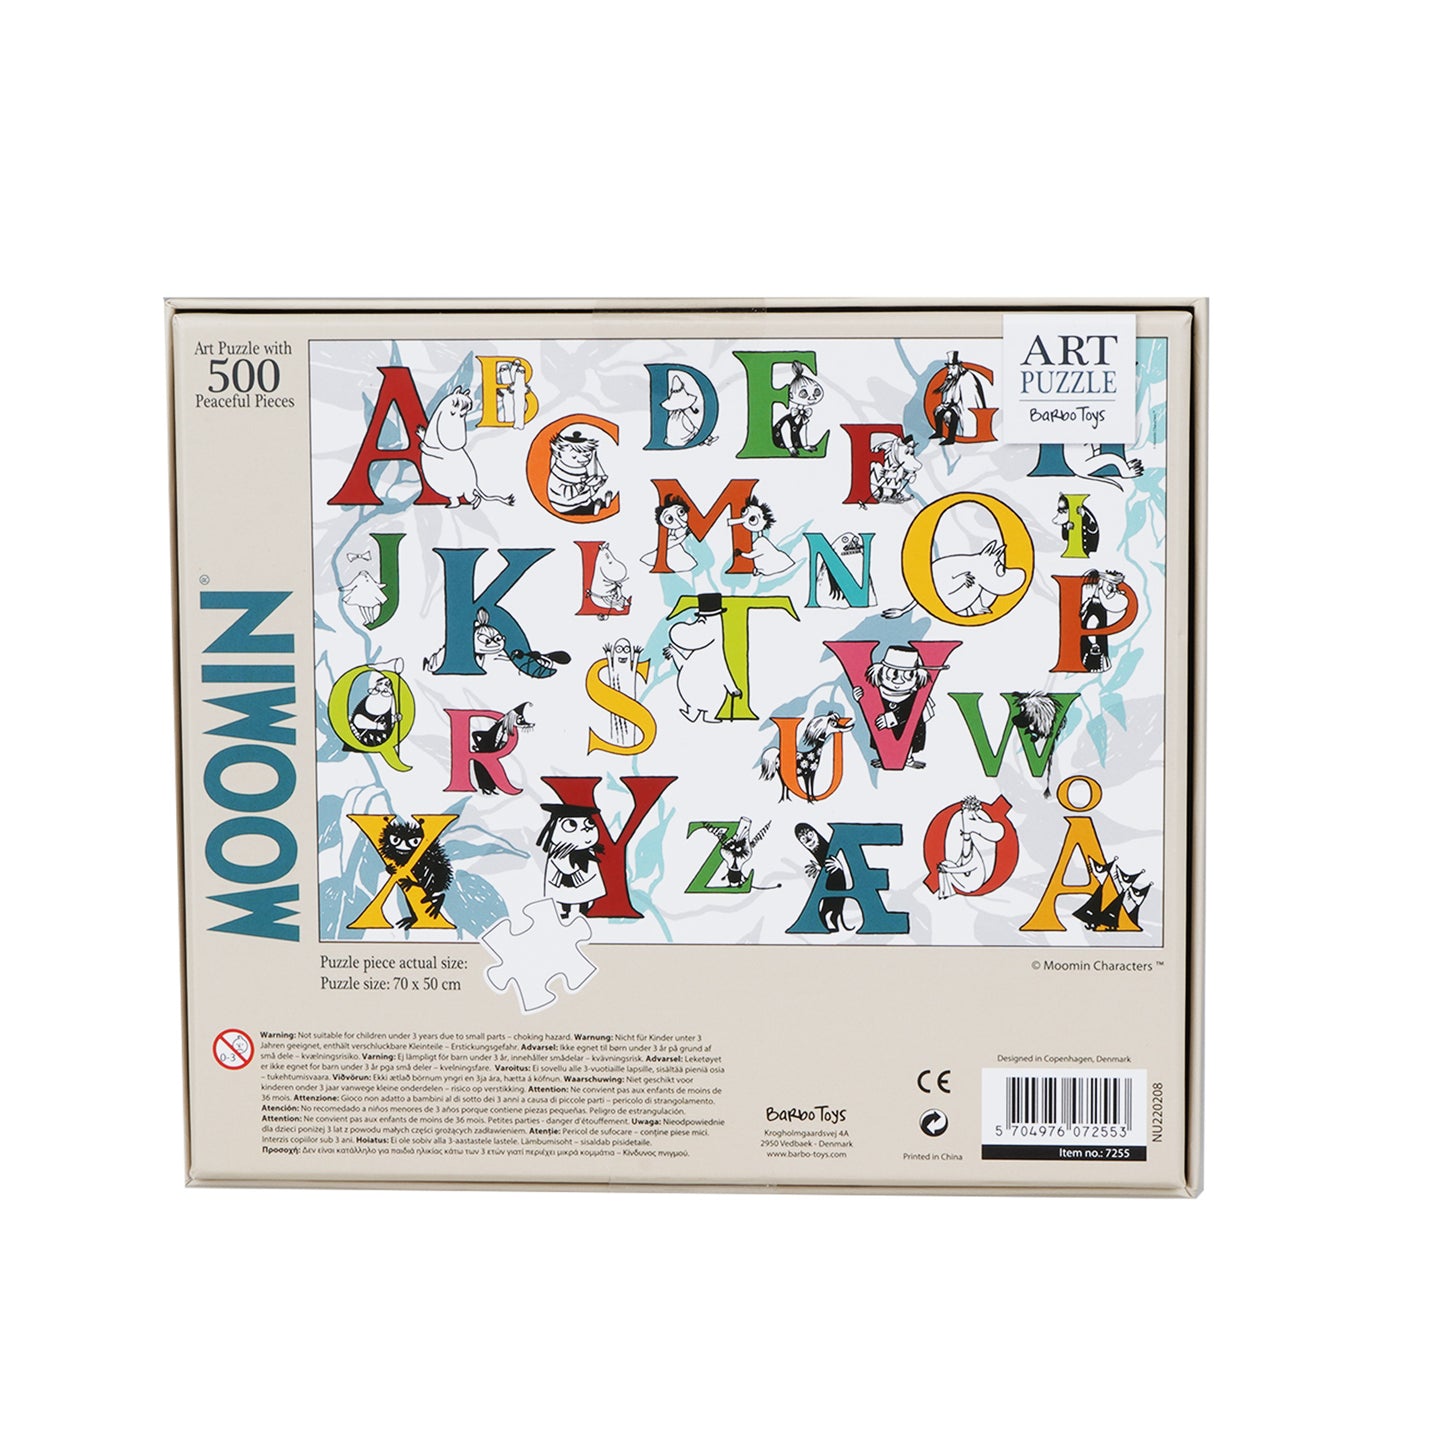 Moomin Art Puzzle - 500 pcs - ABC